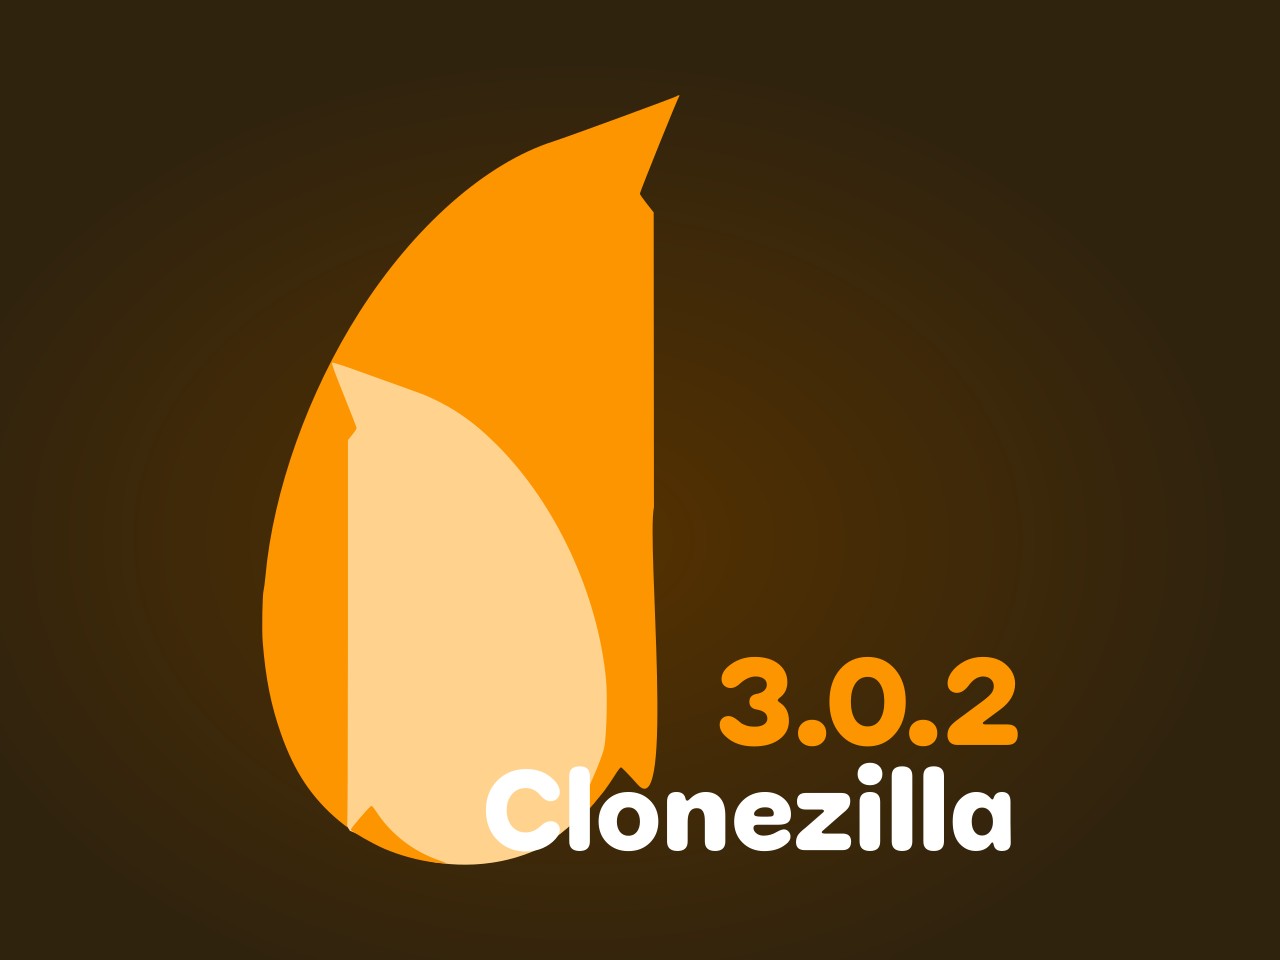 Clonezilla Live 3.1.1-27 instal the new for ios